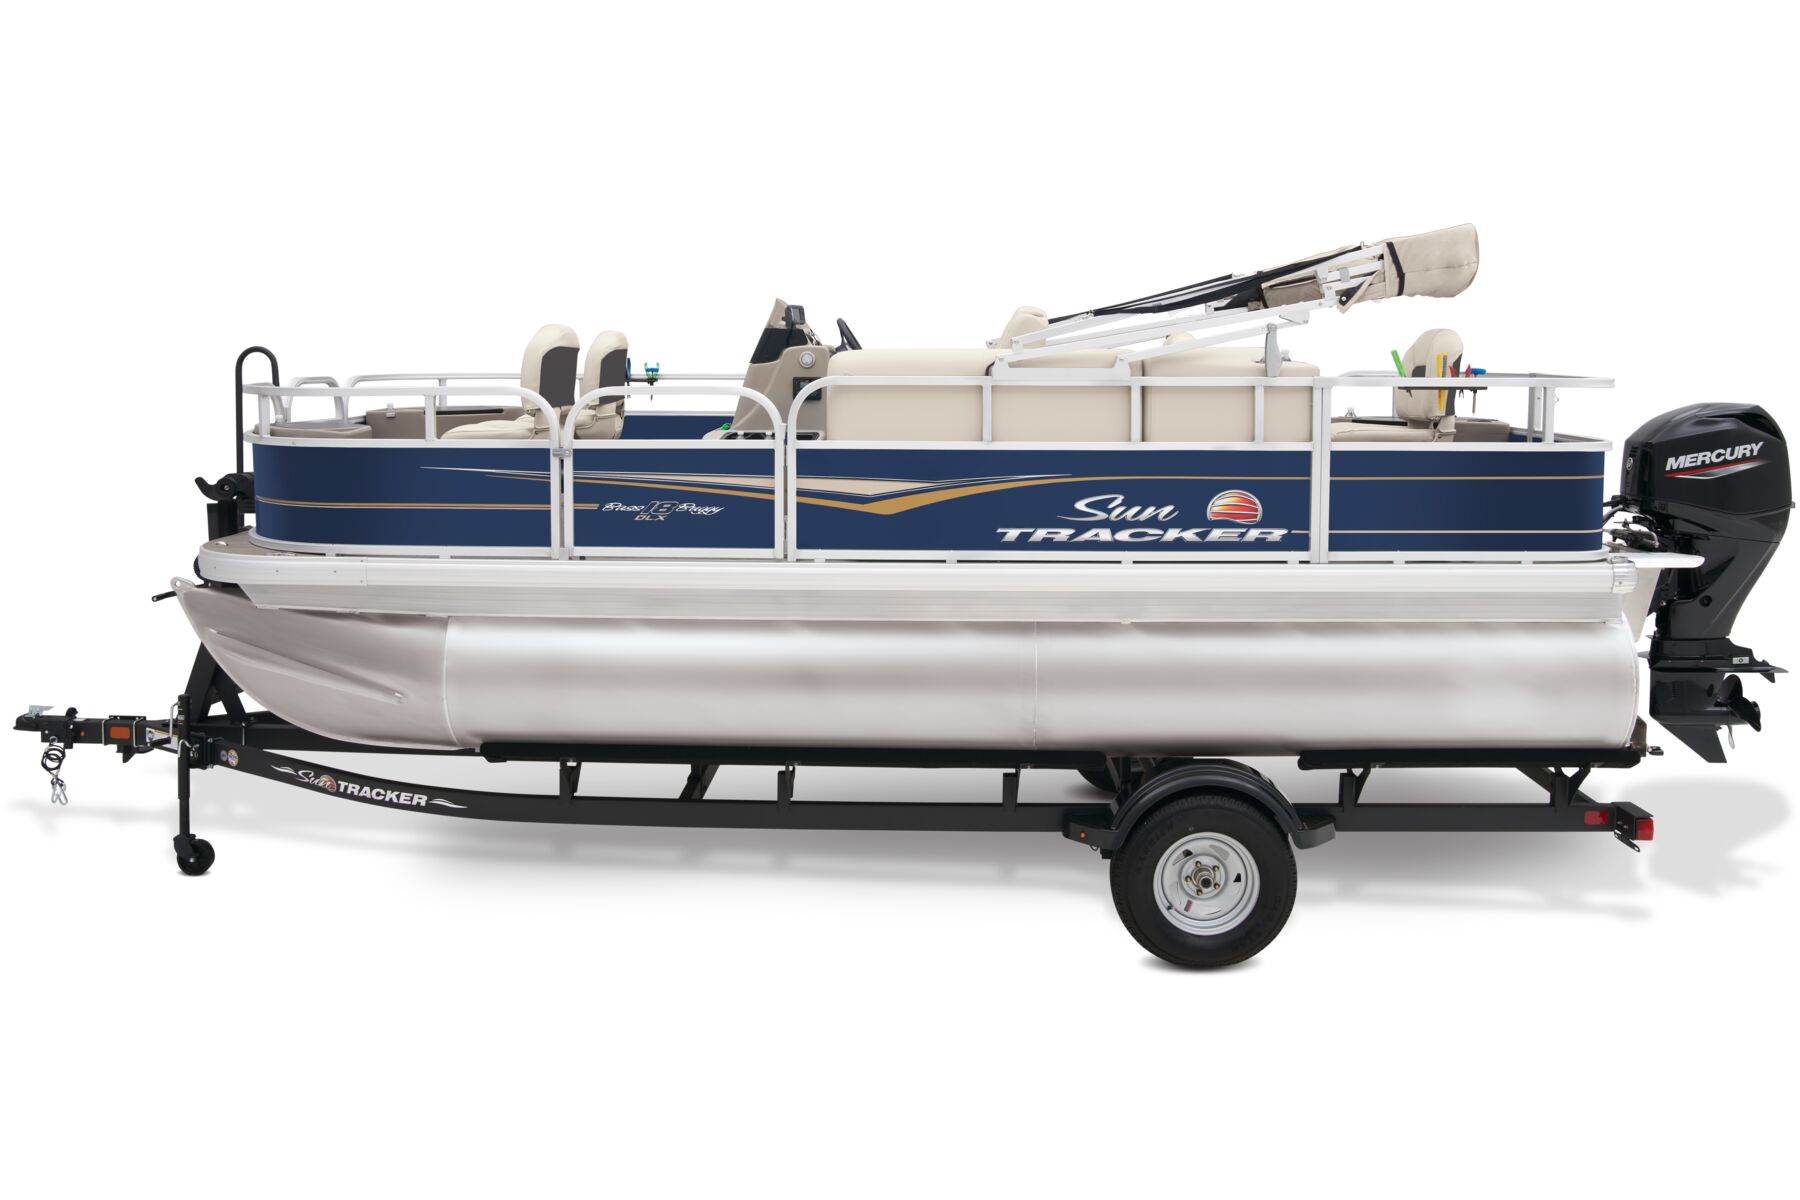 BASS BUGGY 18 DLX - SUN TRACKER Fishing Pontoon Boat